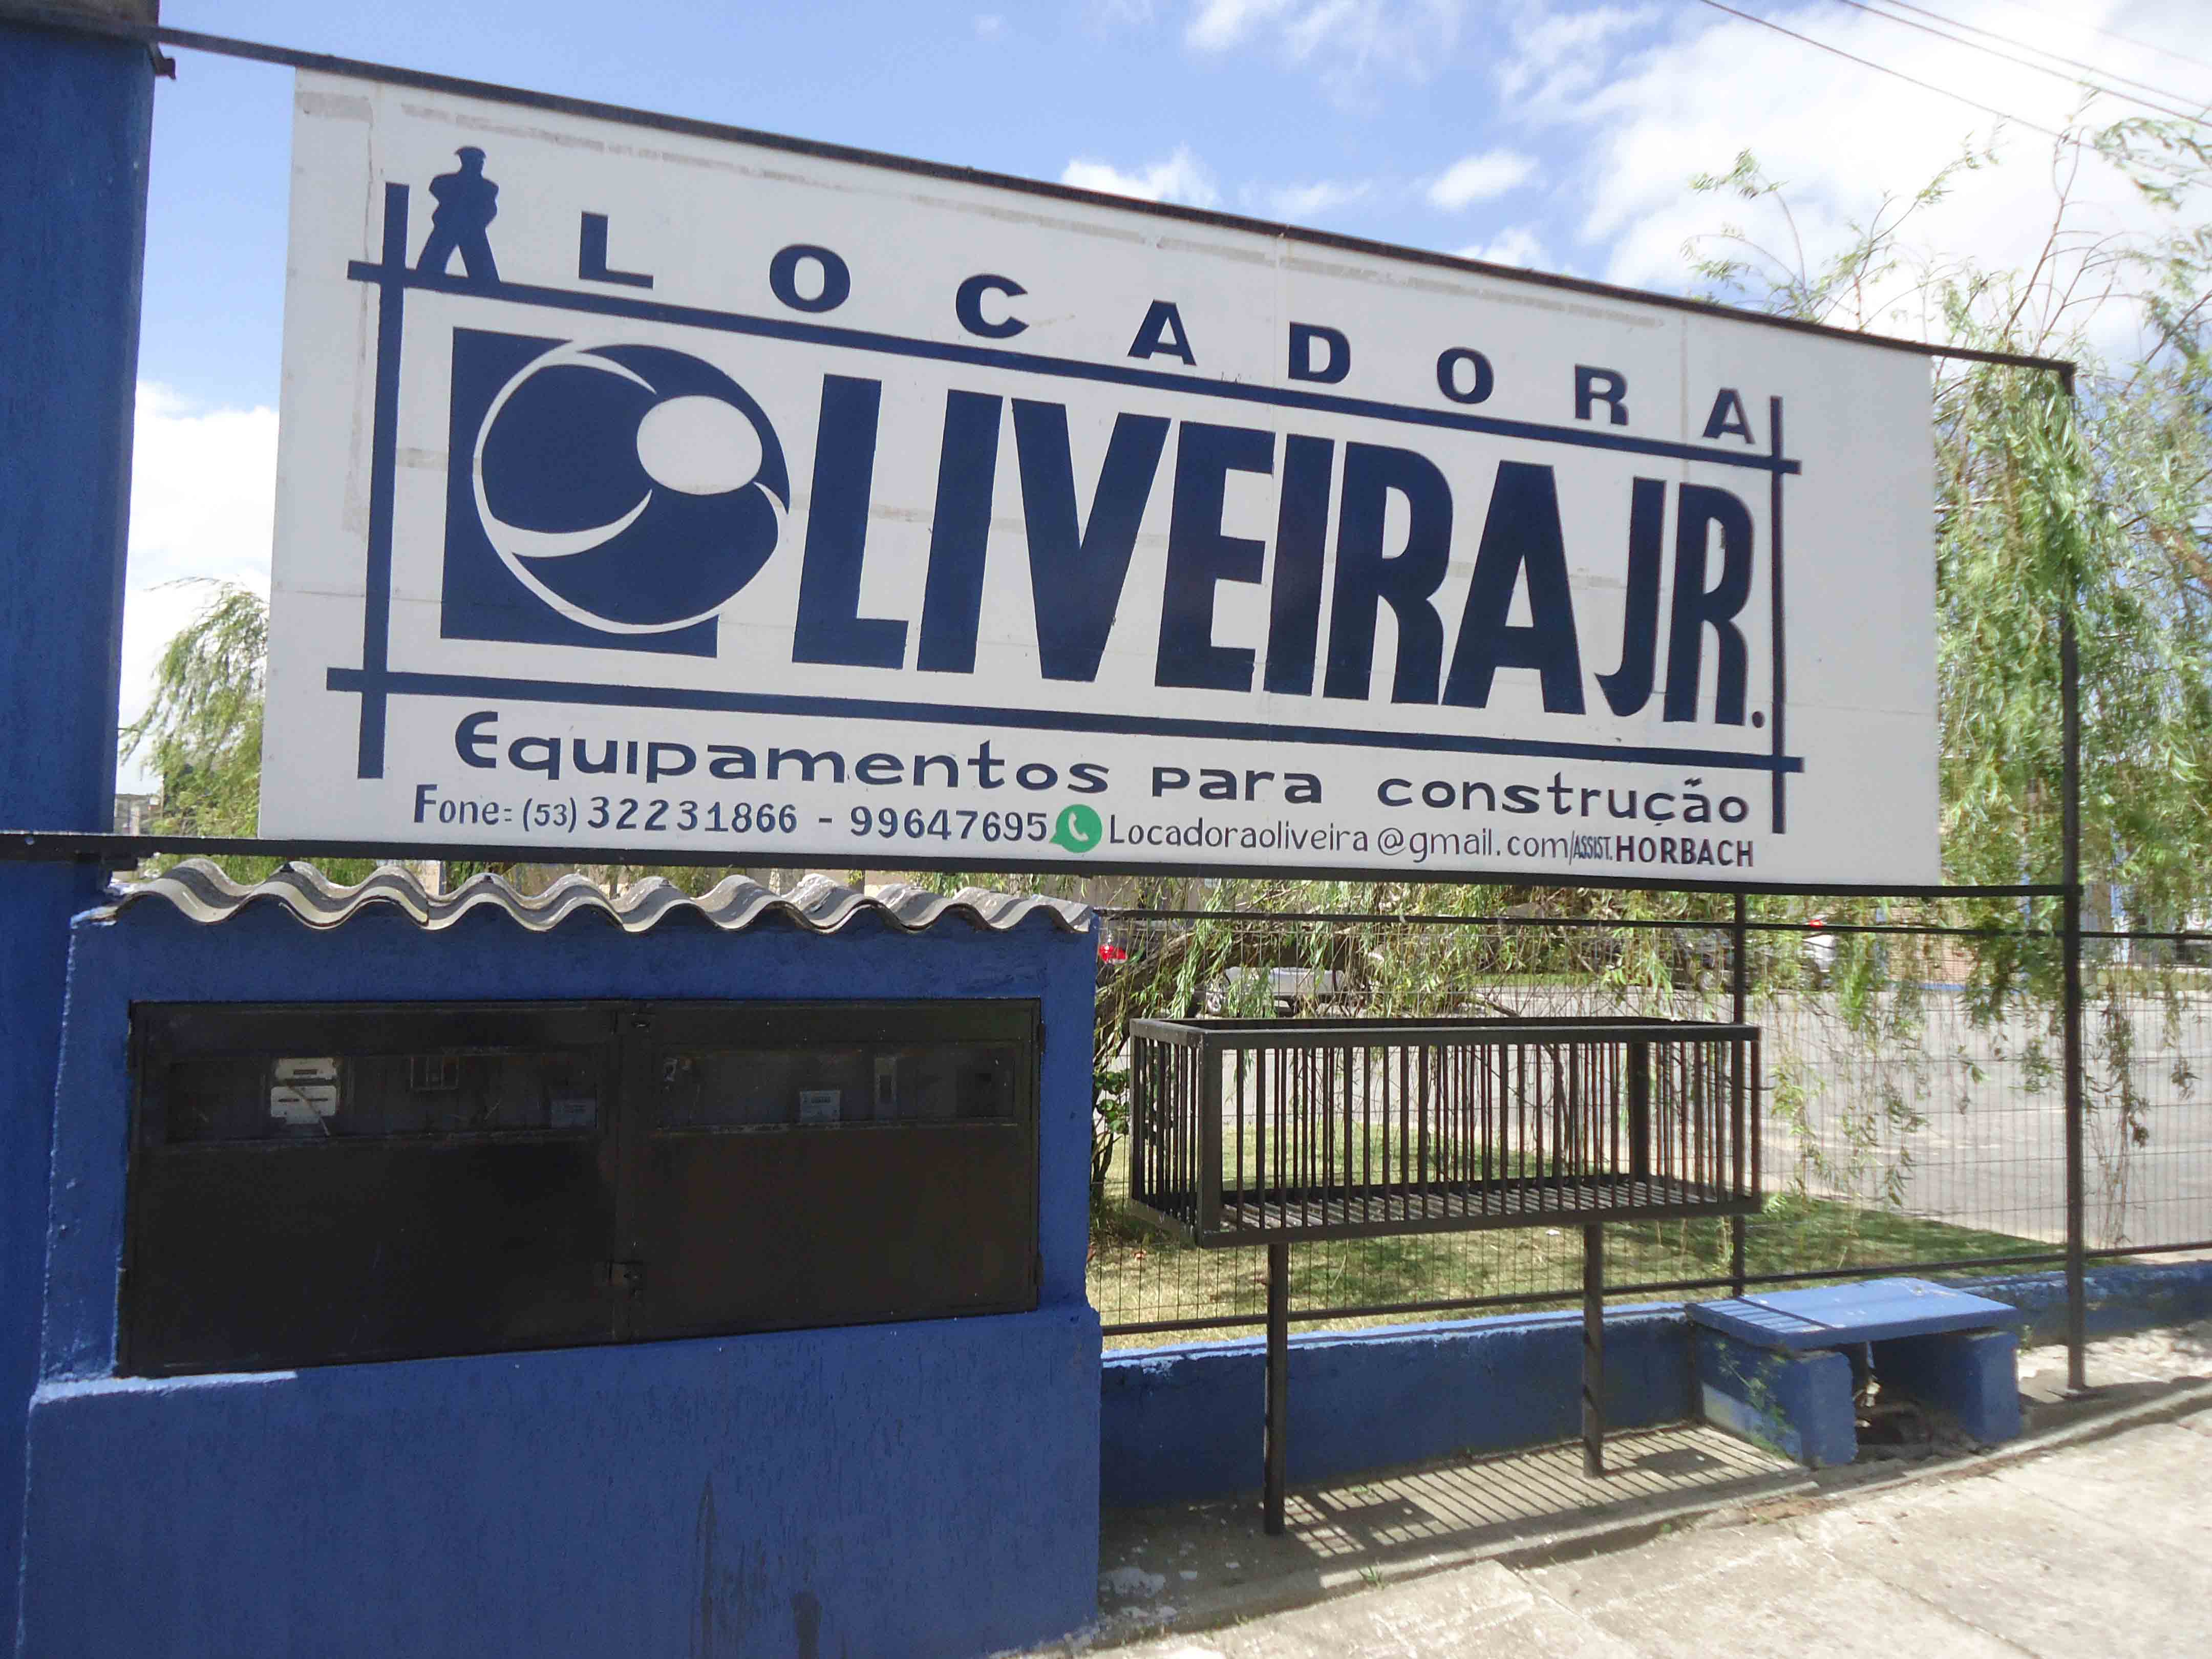 Locadora Oliveira Jr